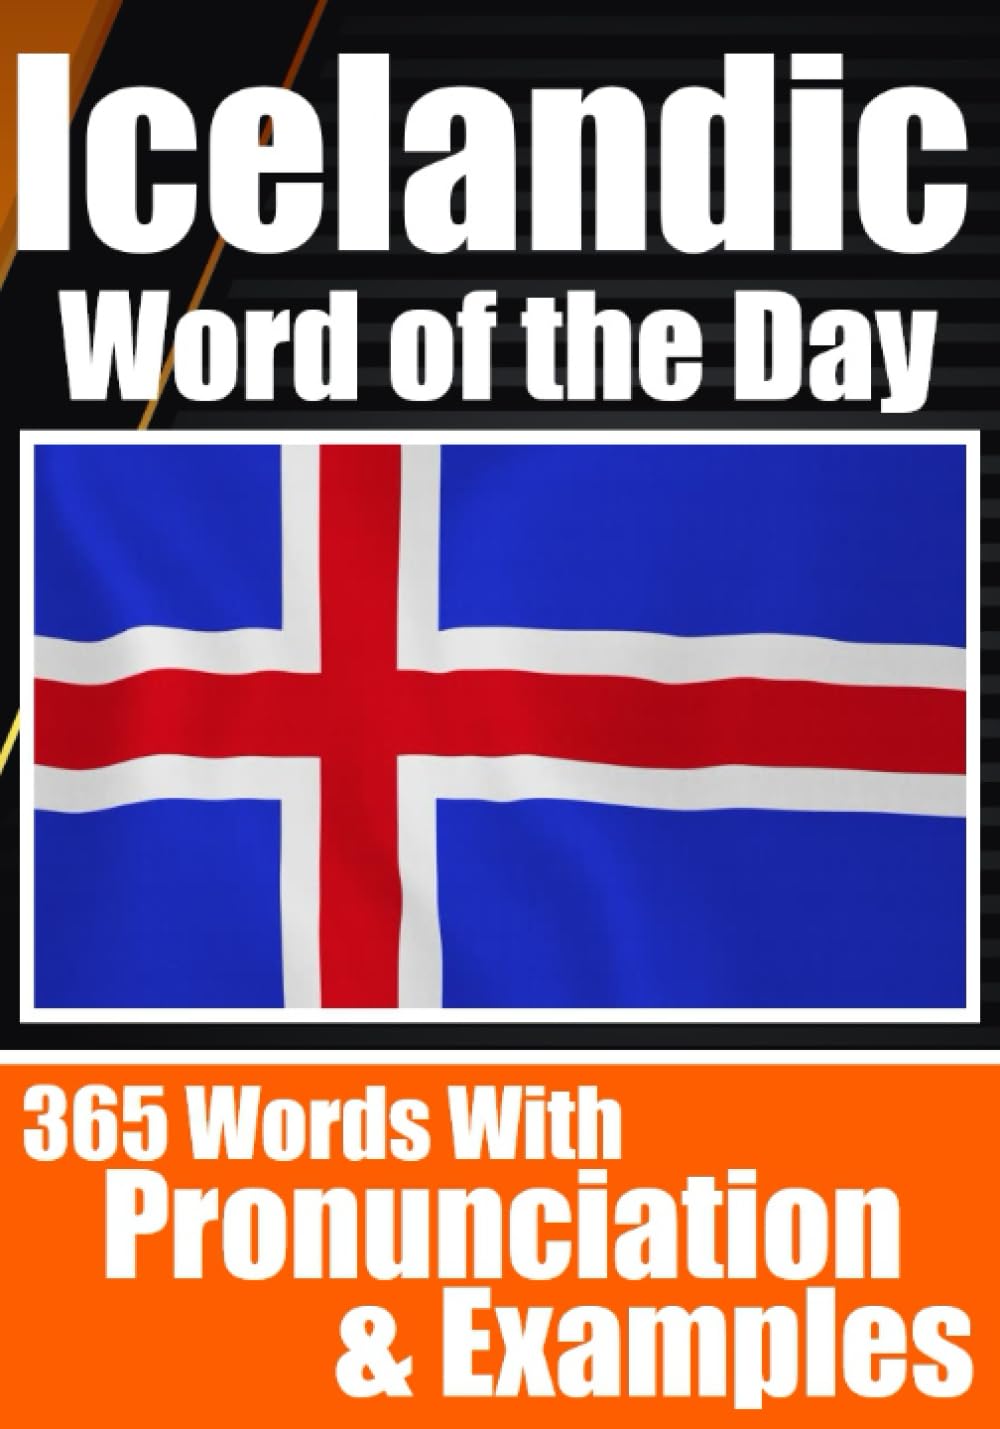 Icelandic Word of the Day | Icelandic Vocabulary Made Simple - Skriuwer.com